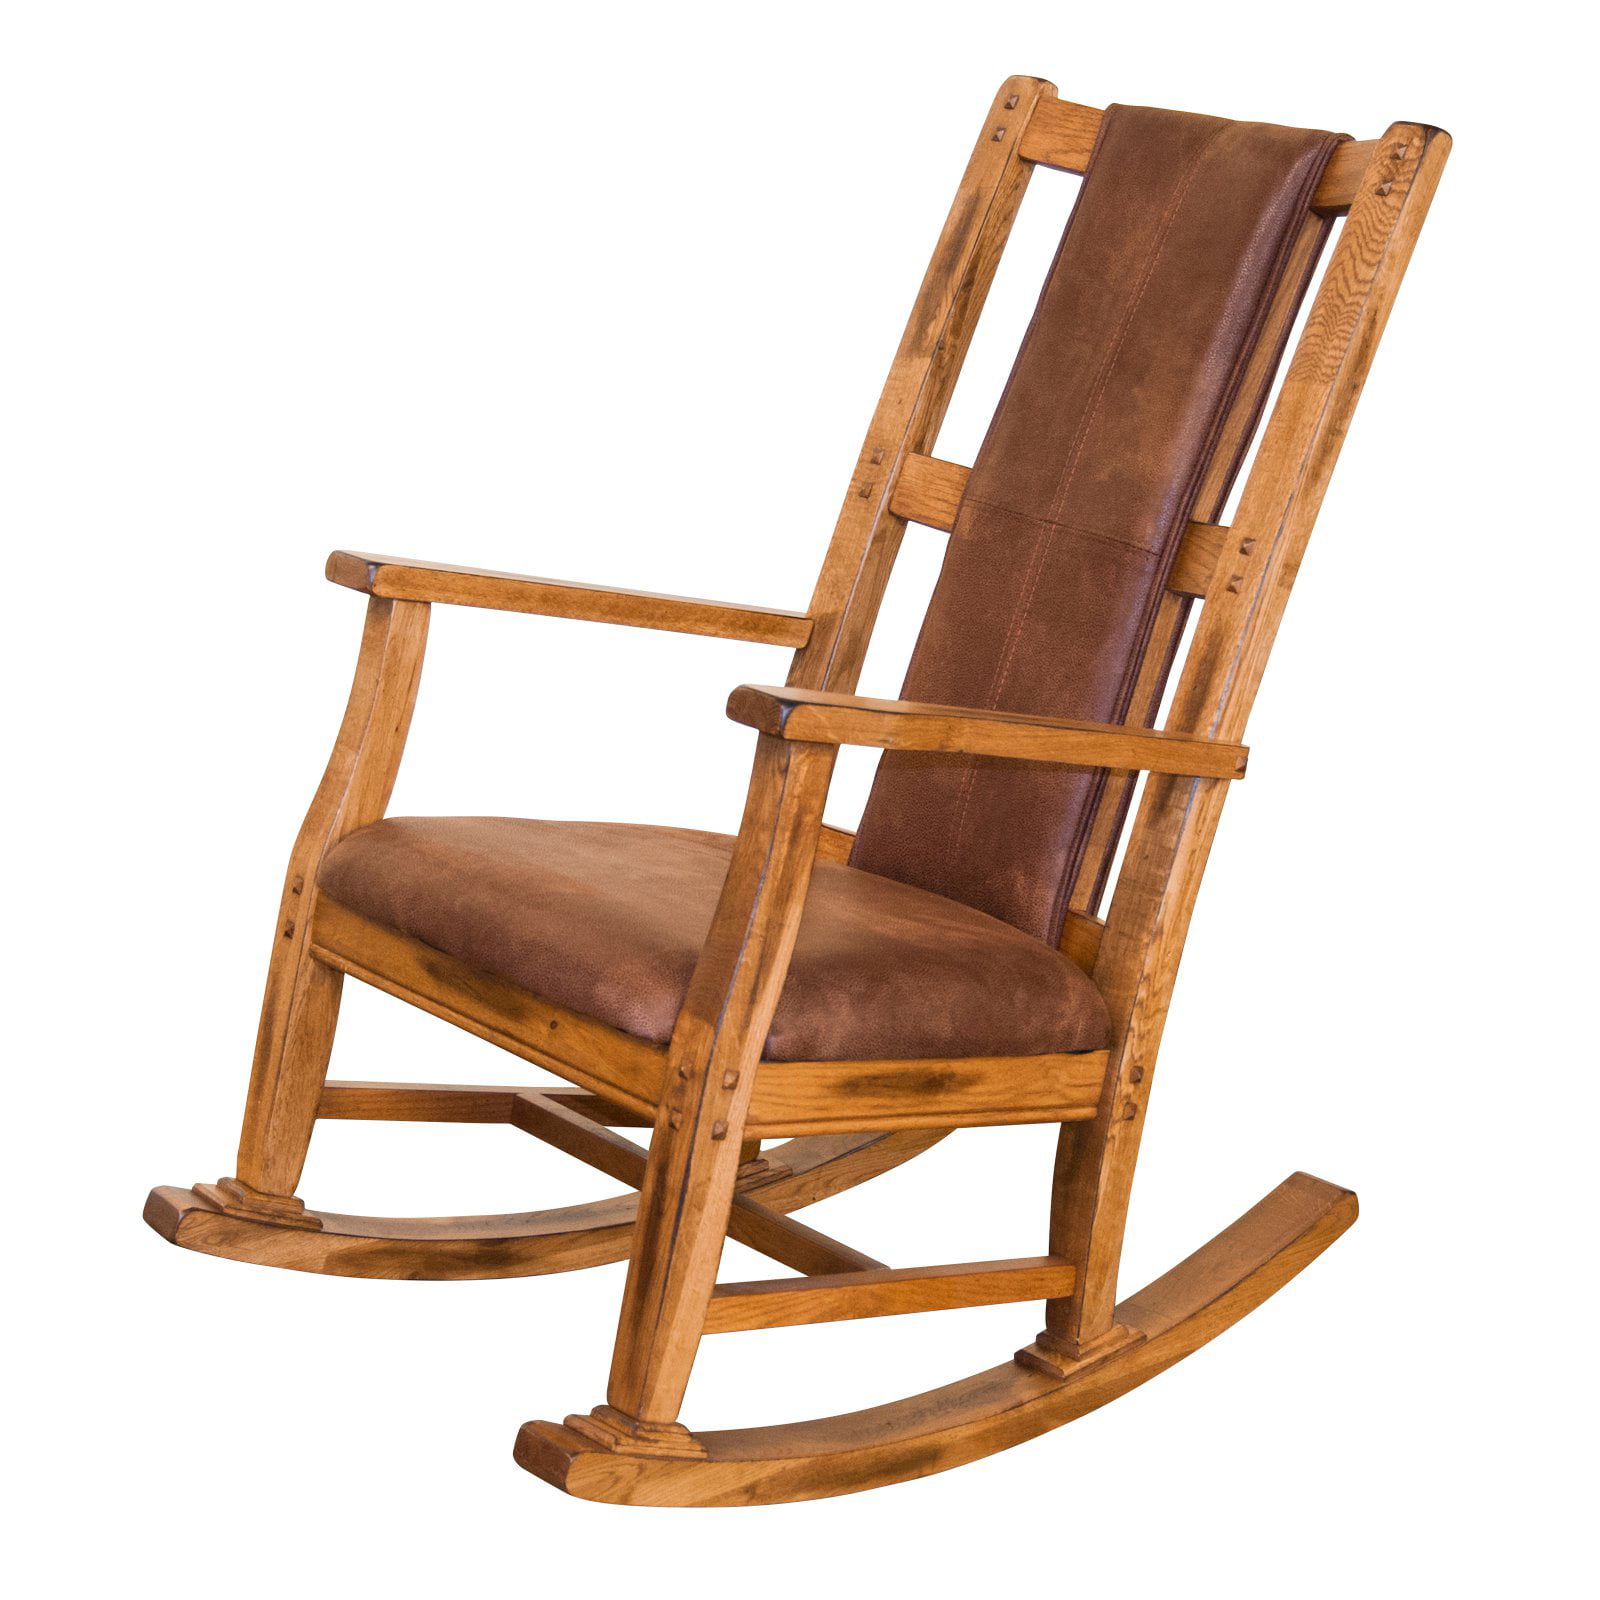 Sunny Designs Sedona Indoor Rocking Chair - Walmart.com